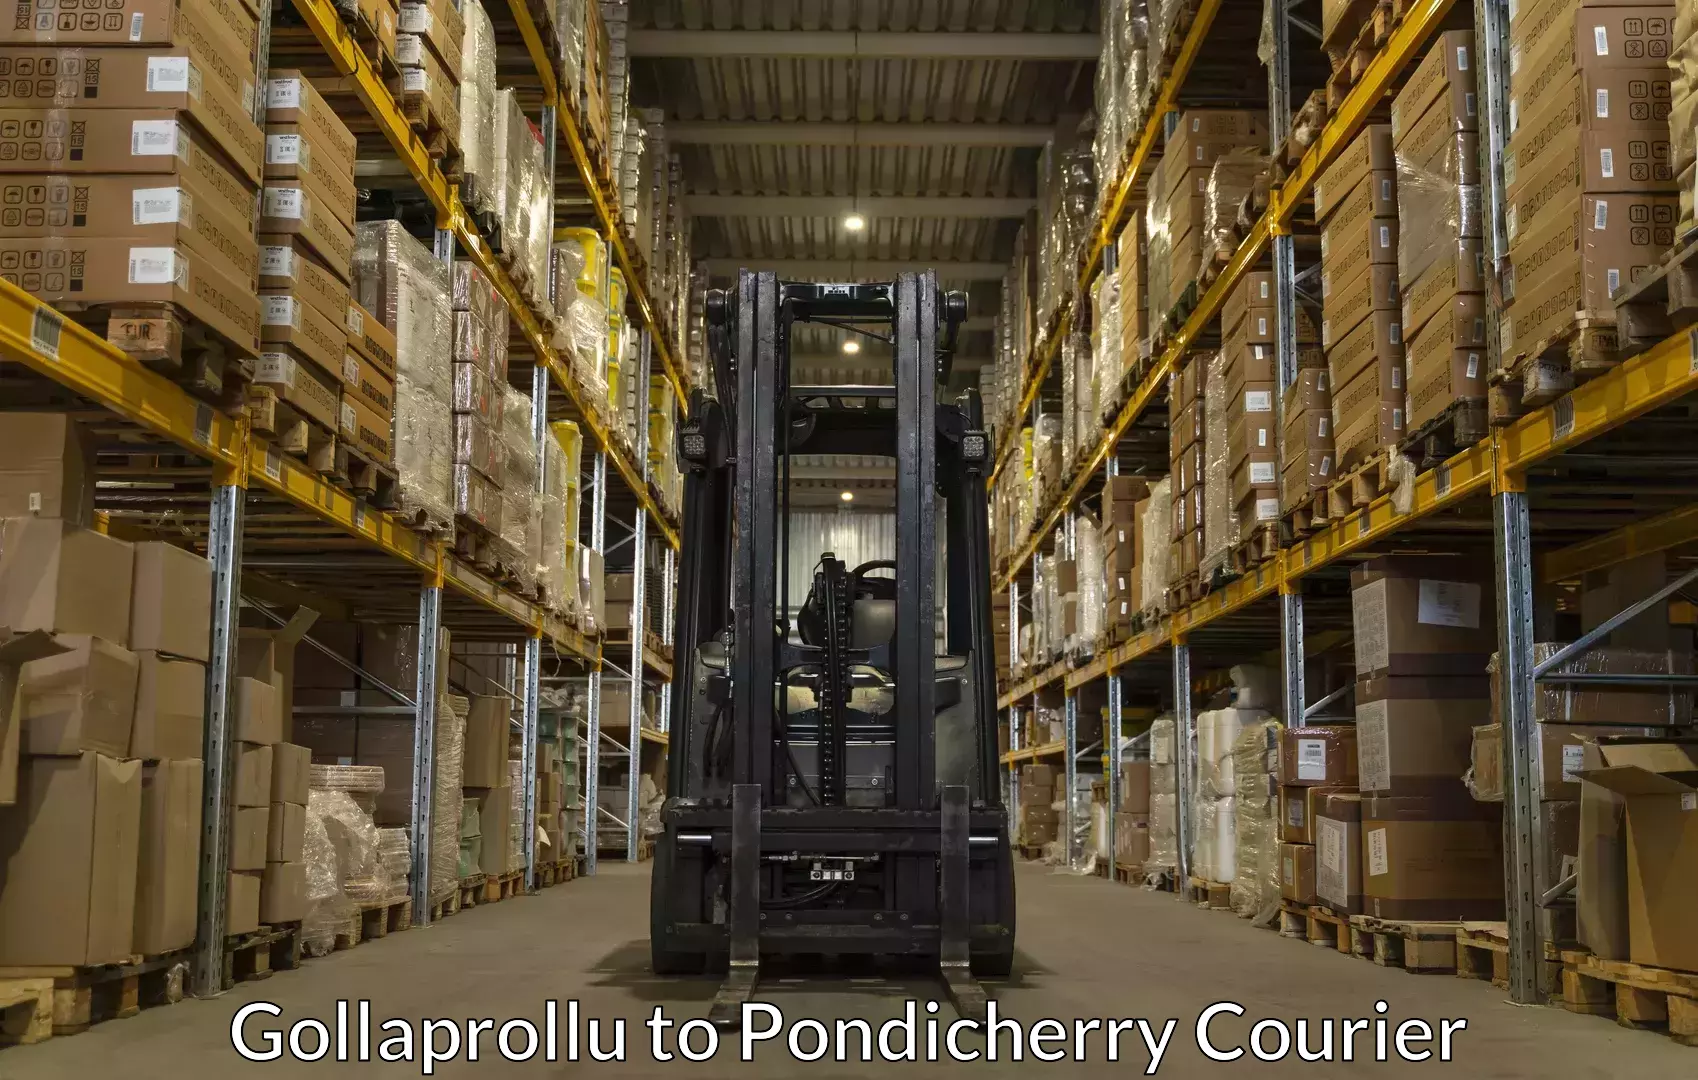 Quality moving company Gollaprollu to Pondicherry